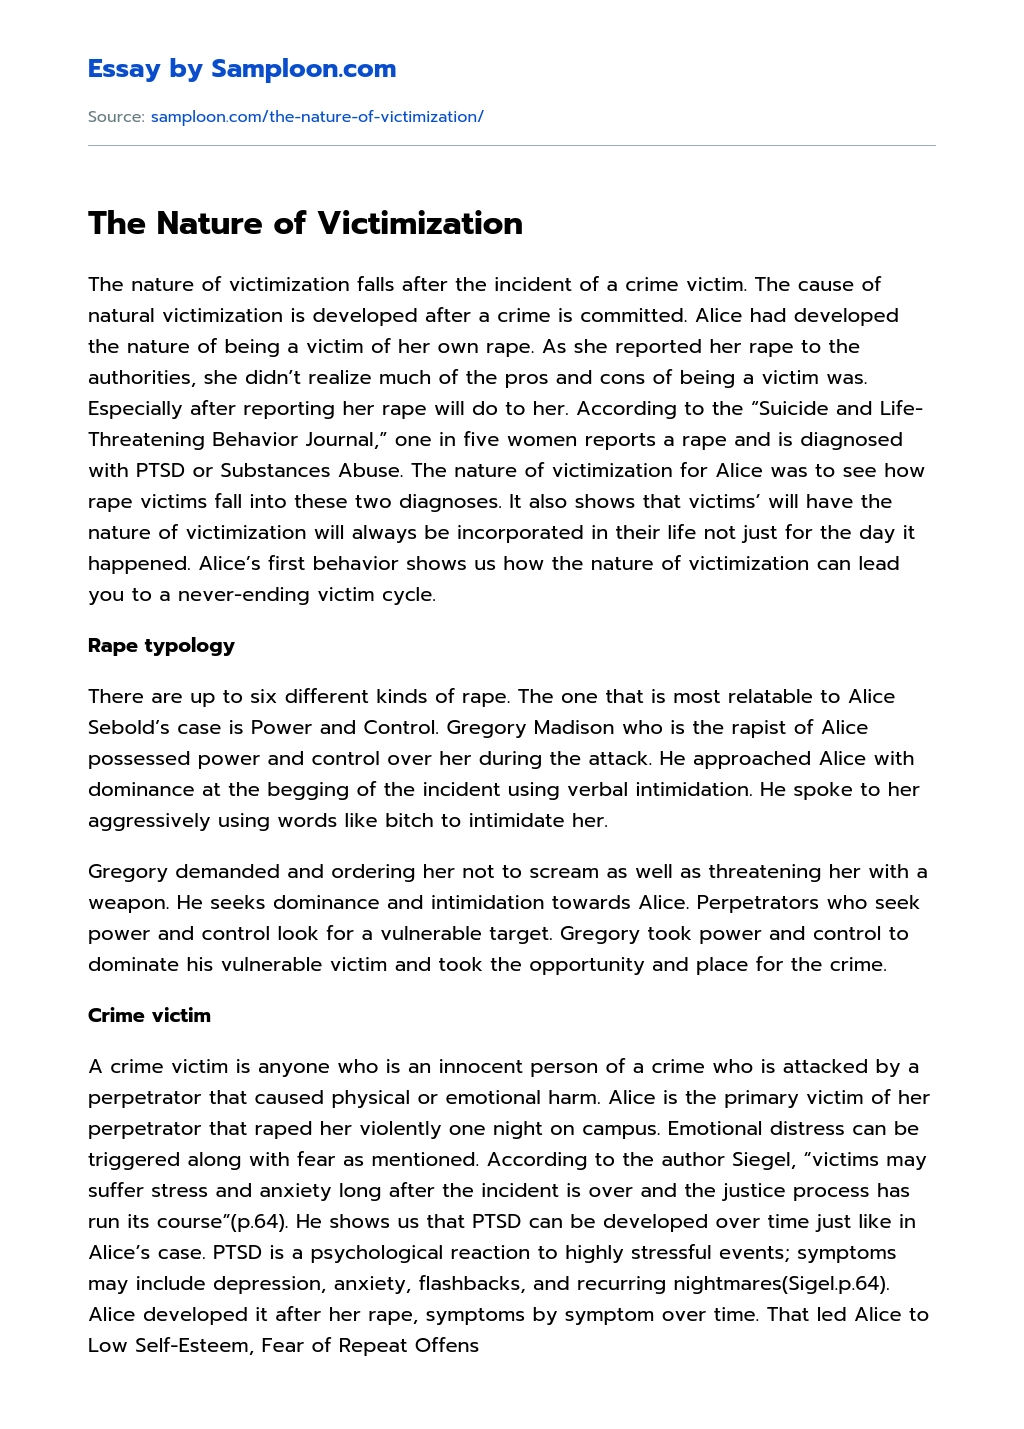 The Nature of Victimization essay